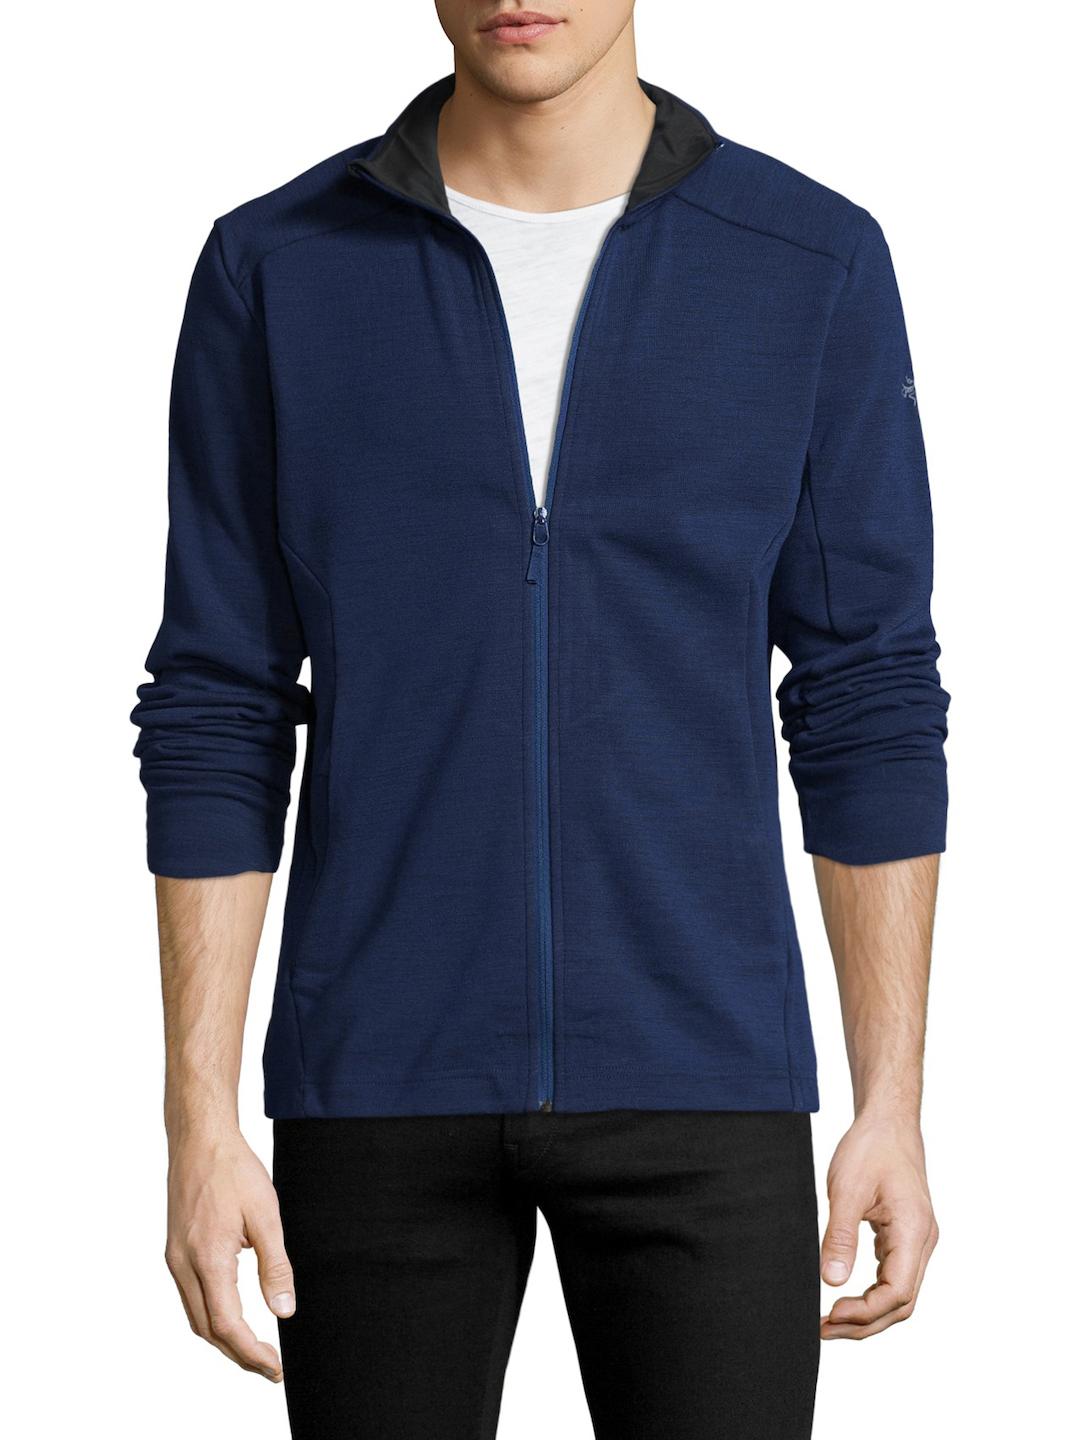 Arc'teryx Synthetic A2b Vinton Jacket in Blue for Men - Lyst